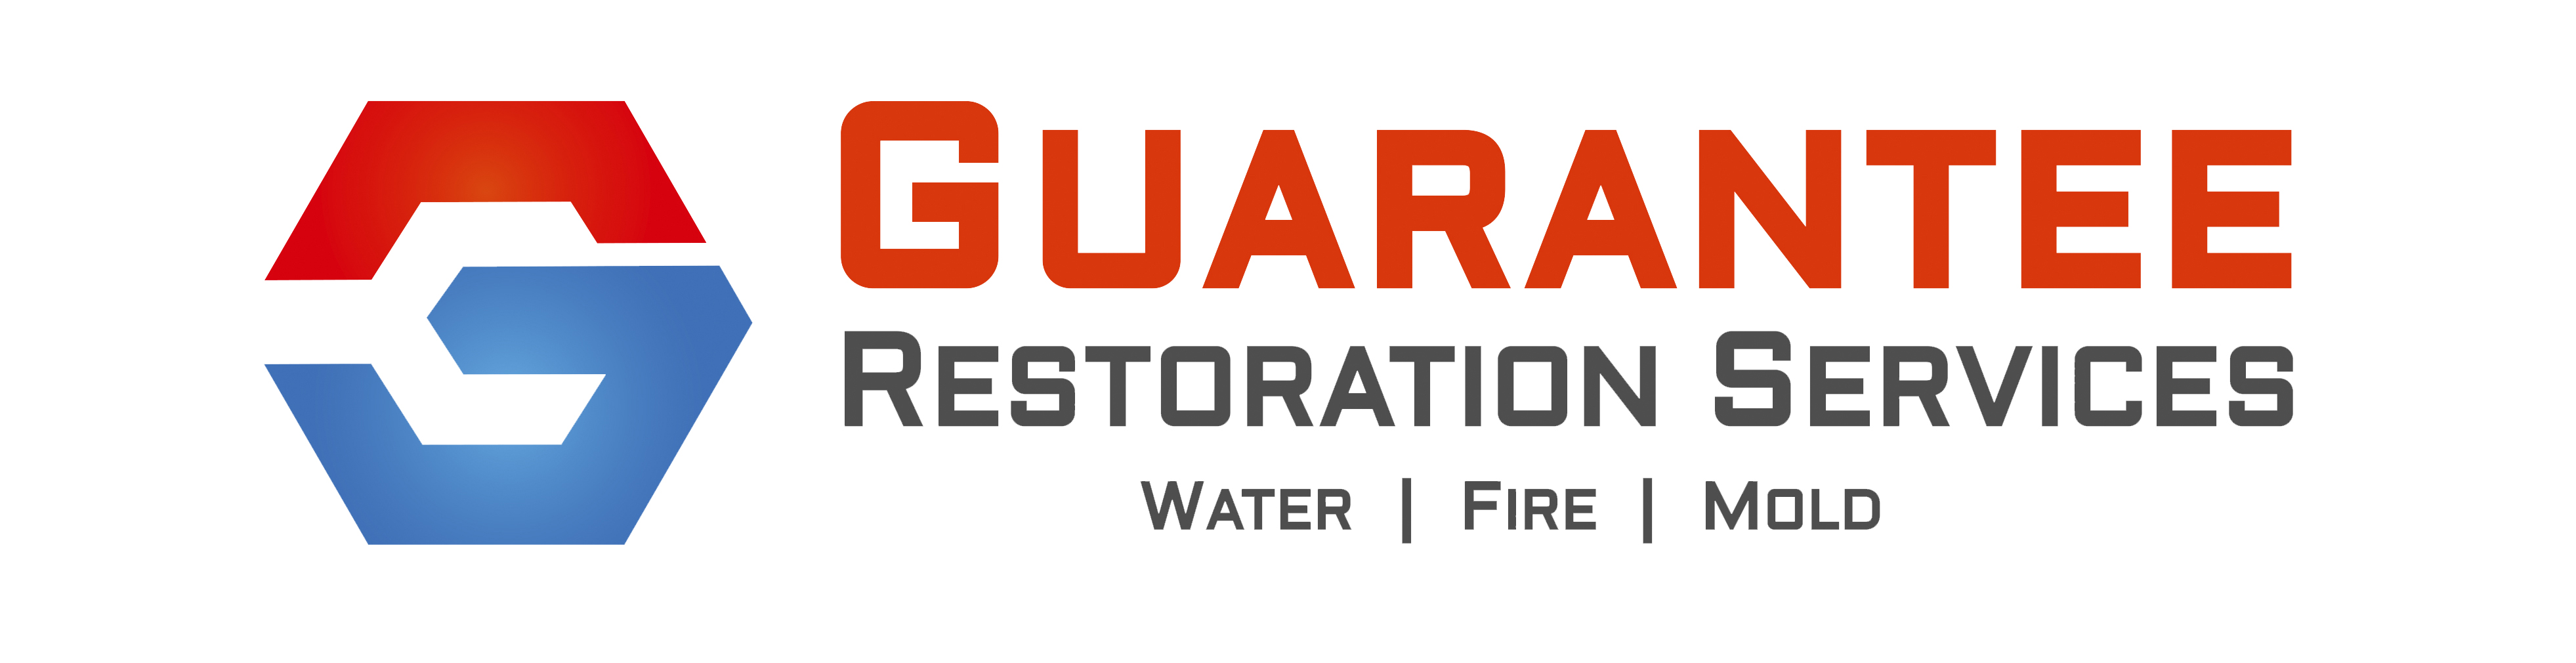 Guarantee Restoration Services